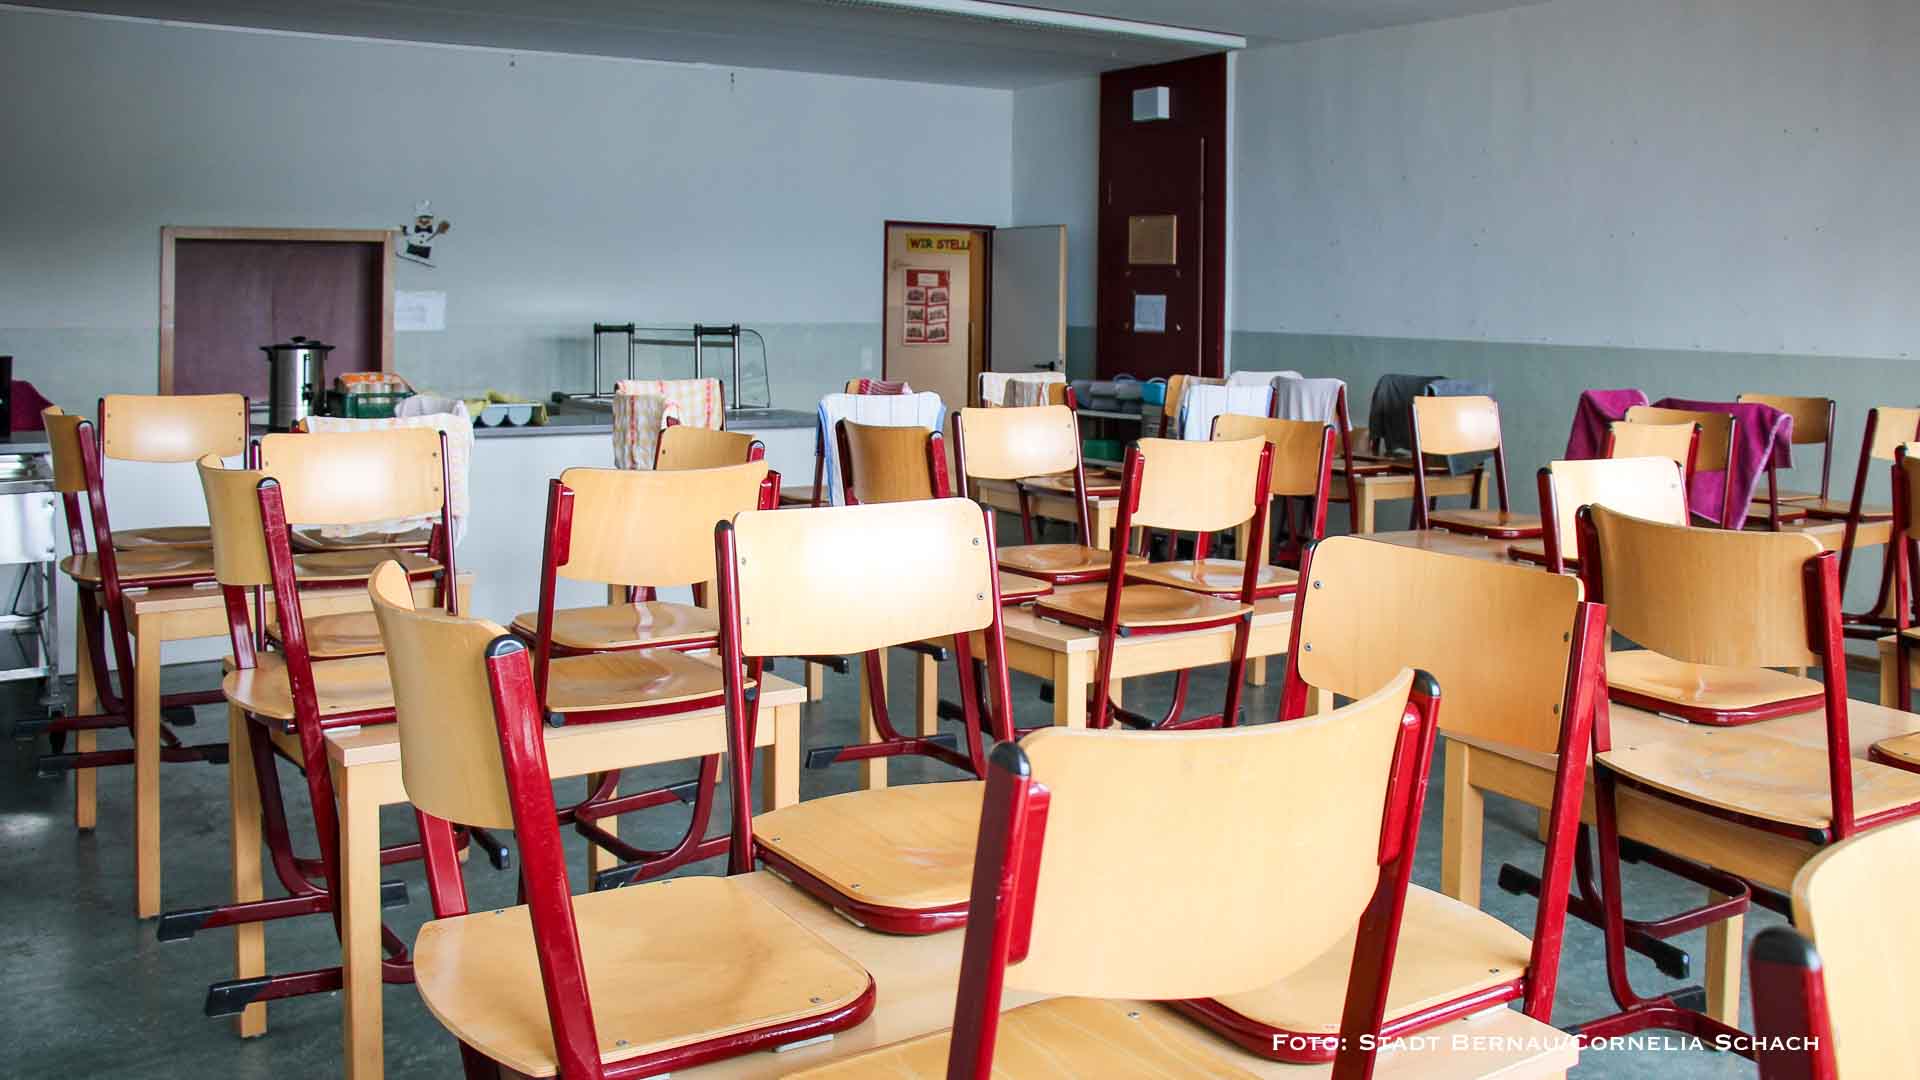 Ferienarbeit: Neuer Speisesaal in der Georg-Rollenhagen-Grundschule